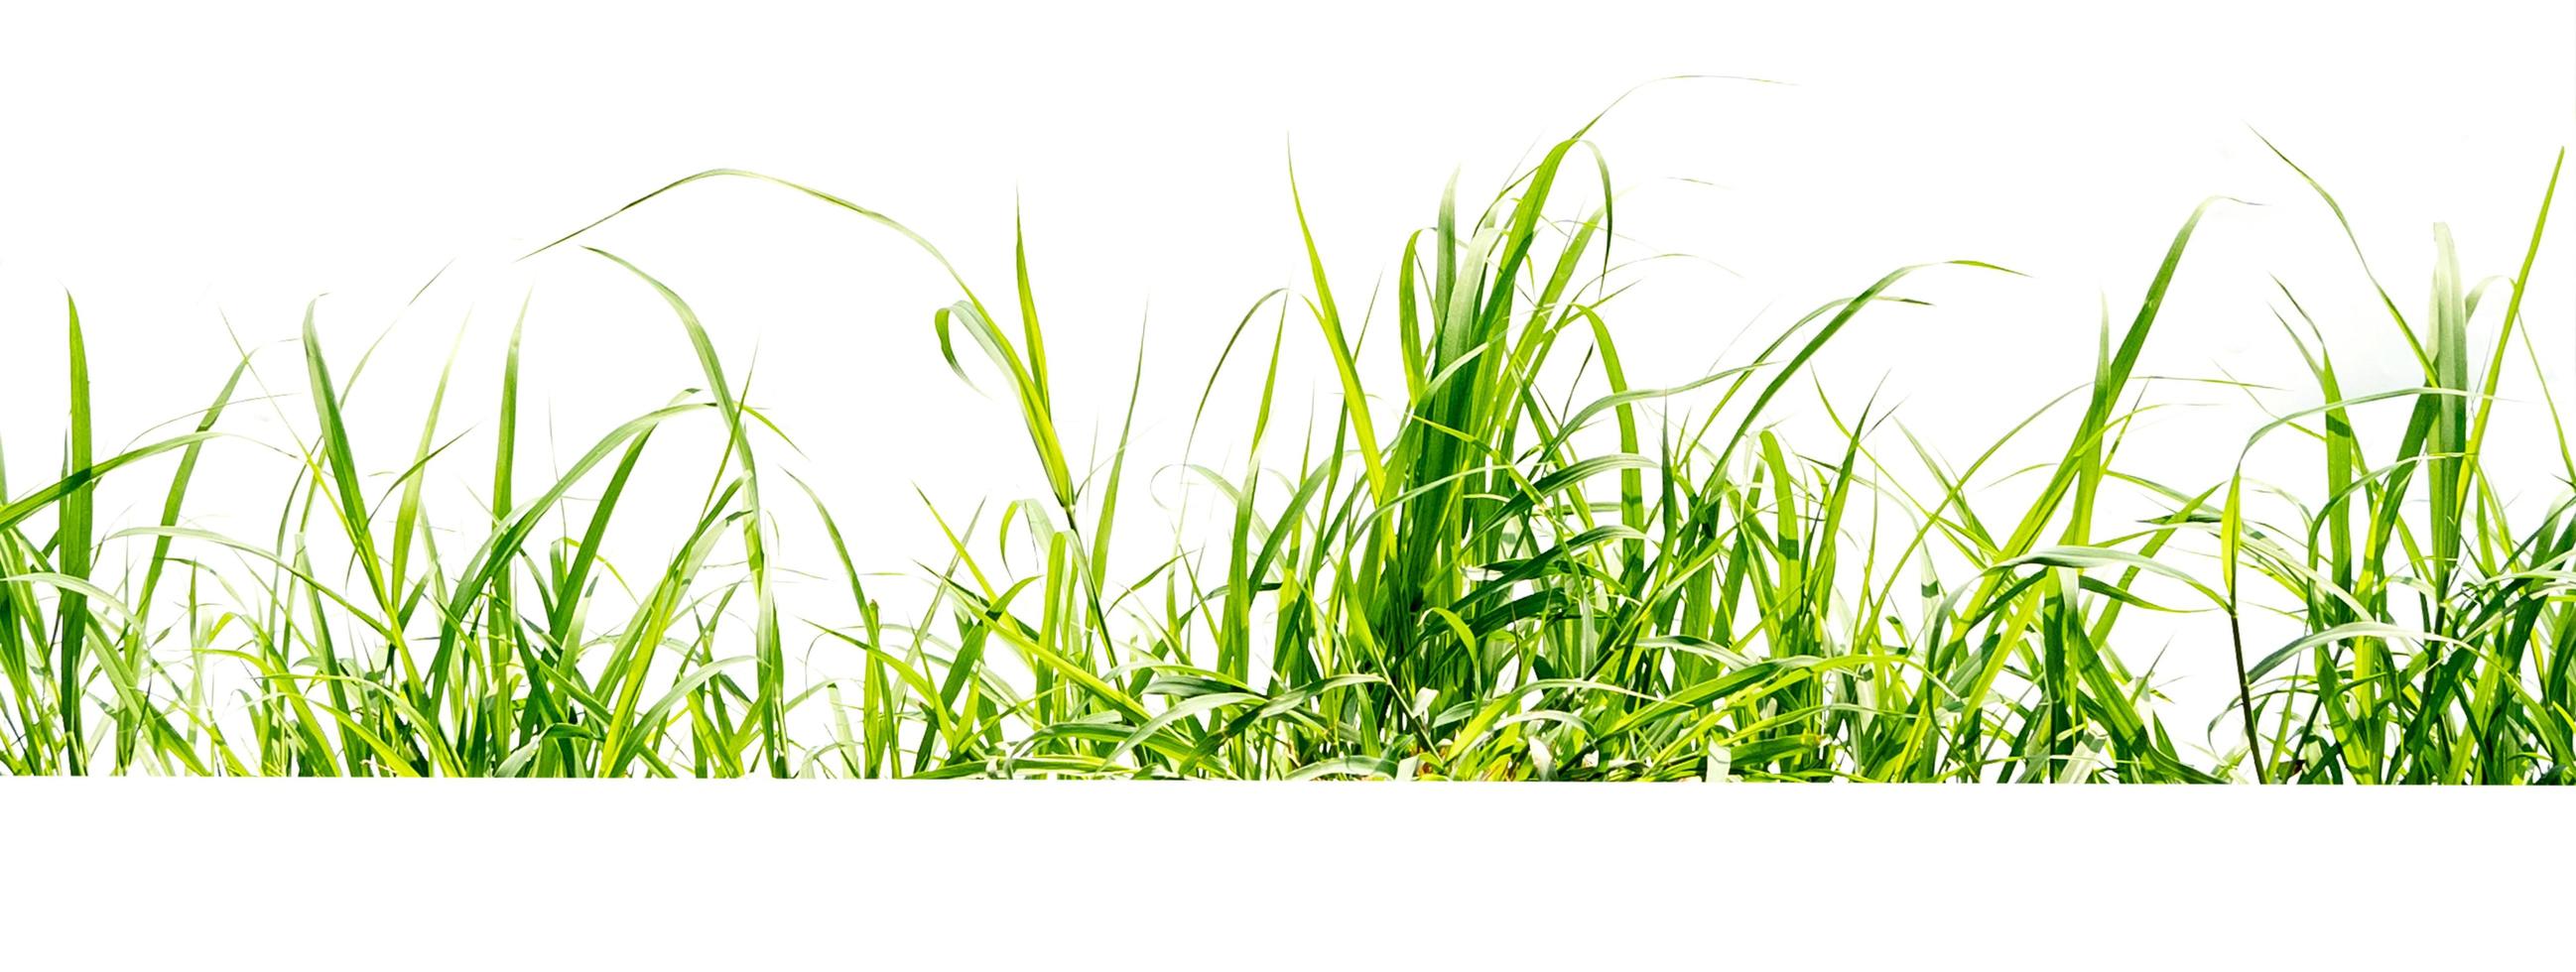 grönt gräs isolera på vit bakgrund foto